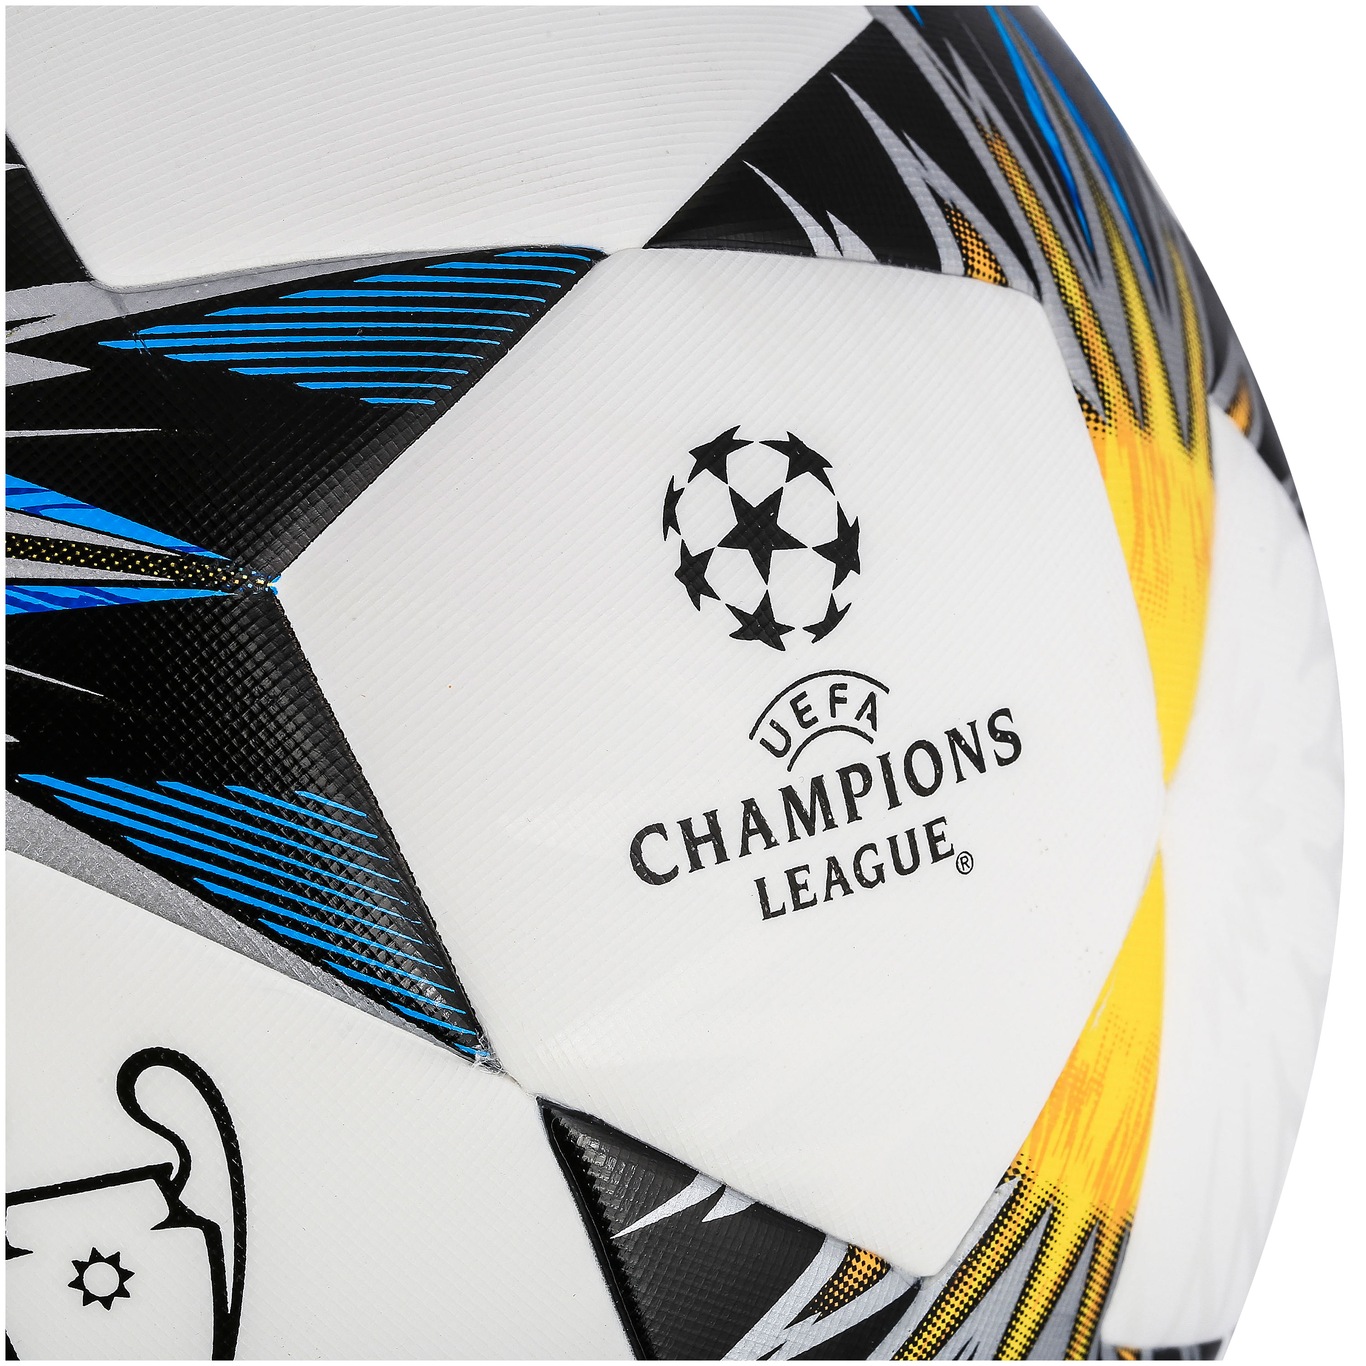 Bola Society adidas Finale UEFA Champions League 2018/19